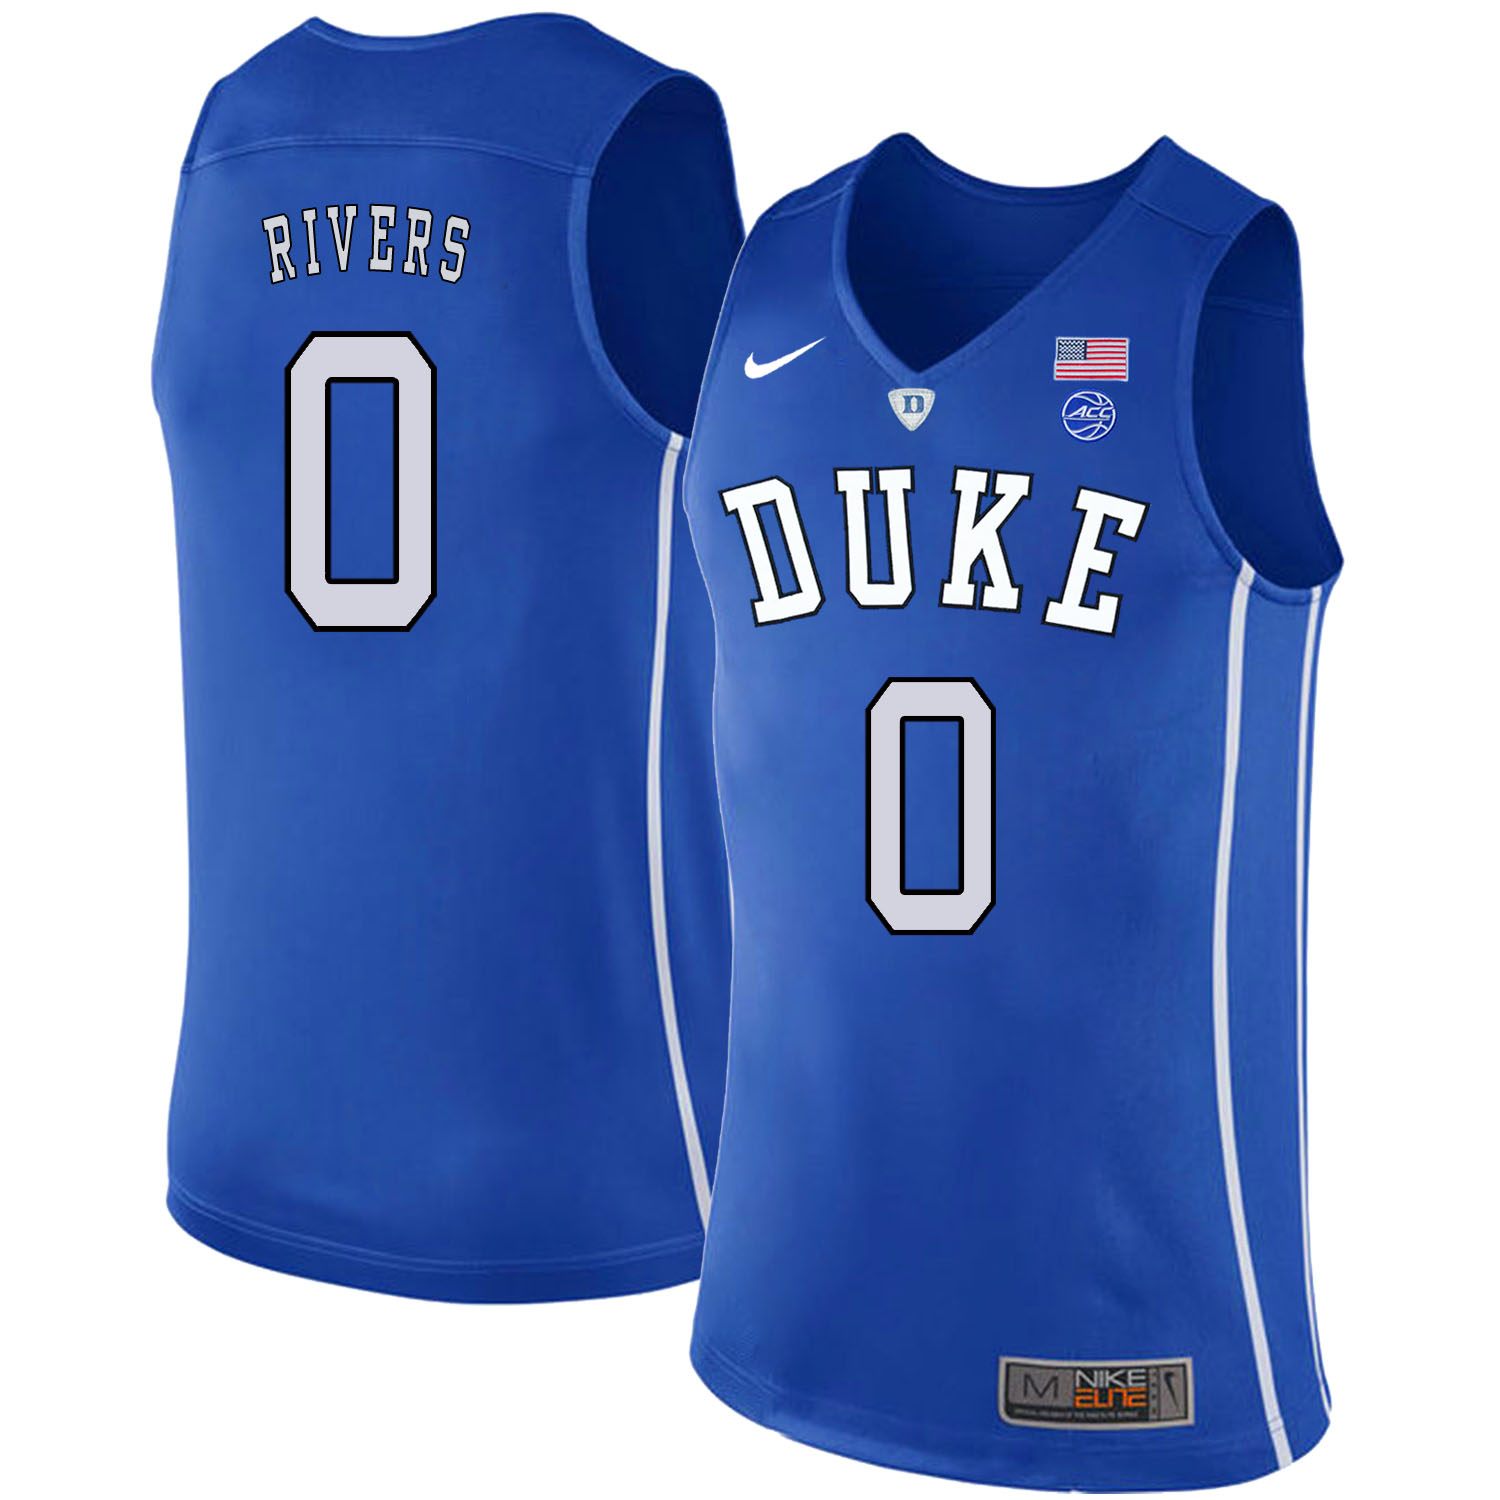 Duke Blue Devils 0 Austin Rivers Blue Nike College Basketball Jersey